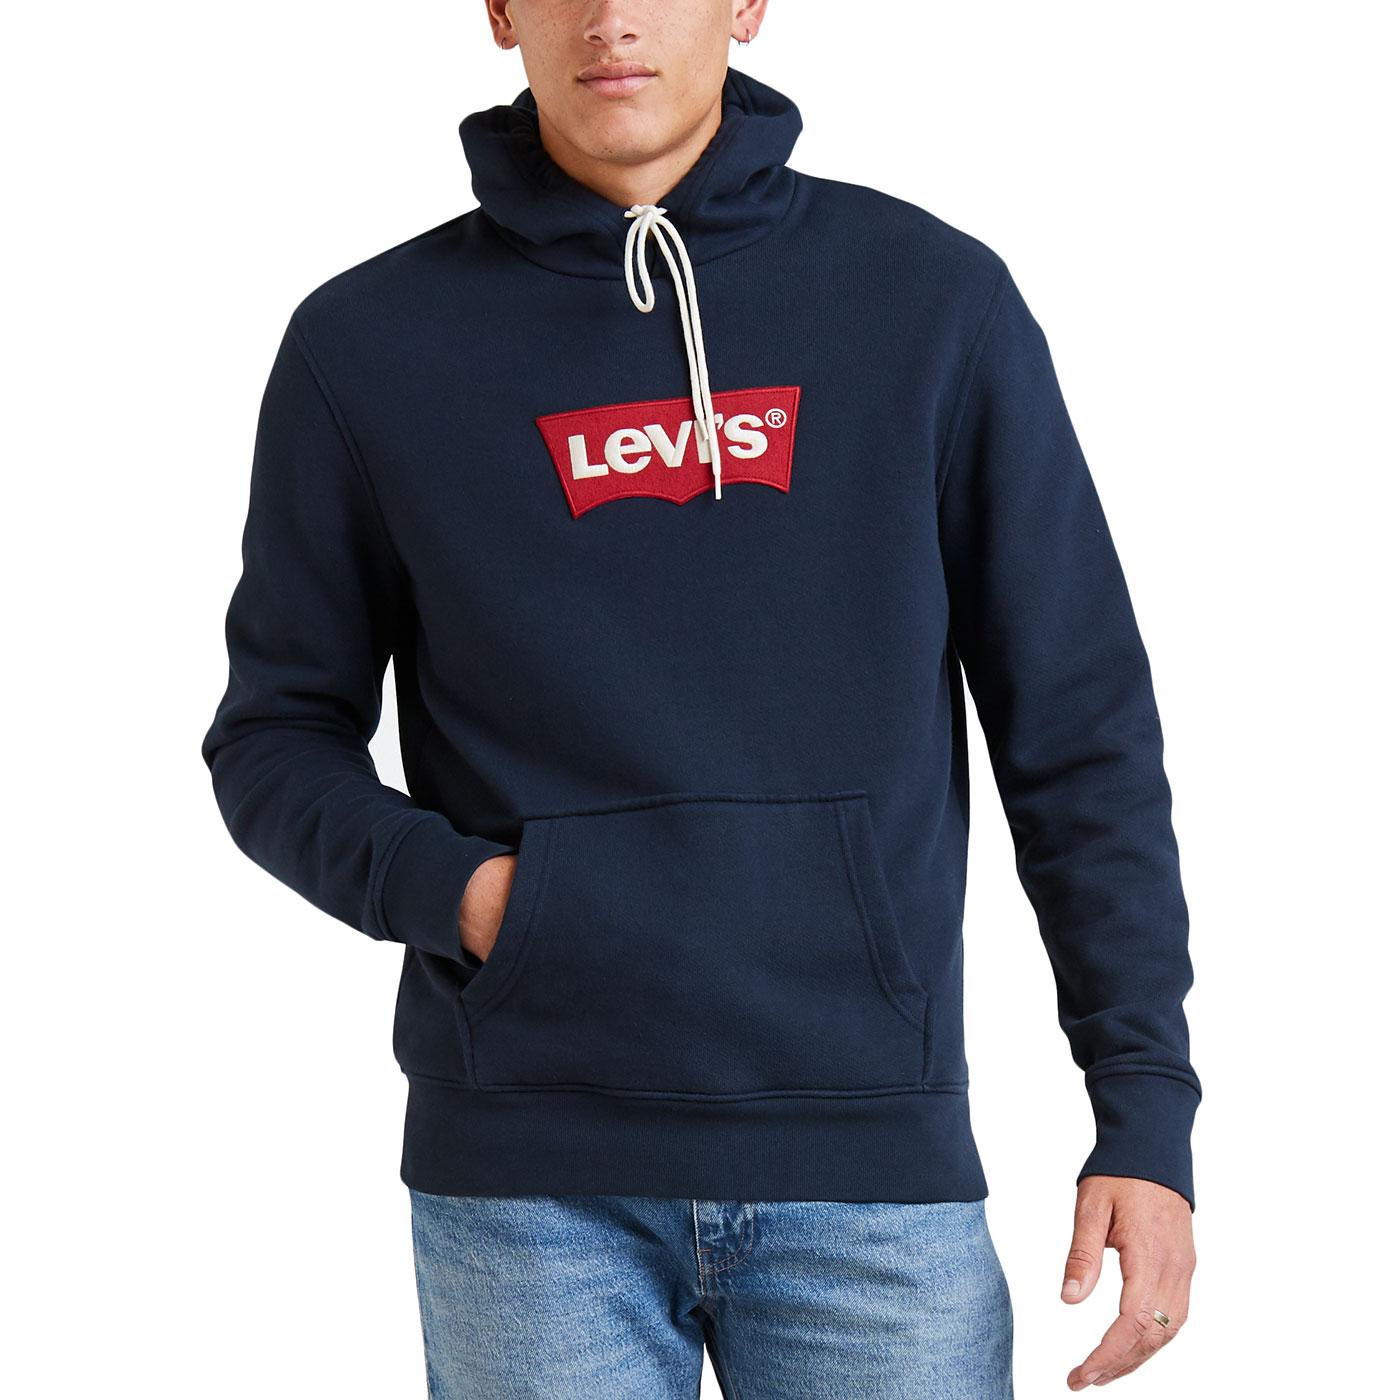 navy levis hoodie